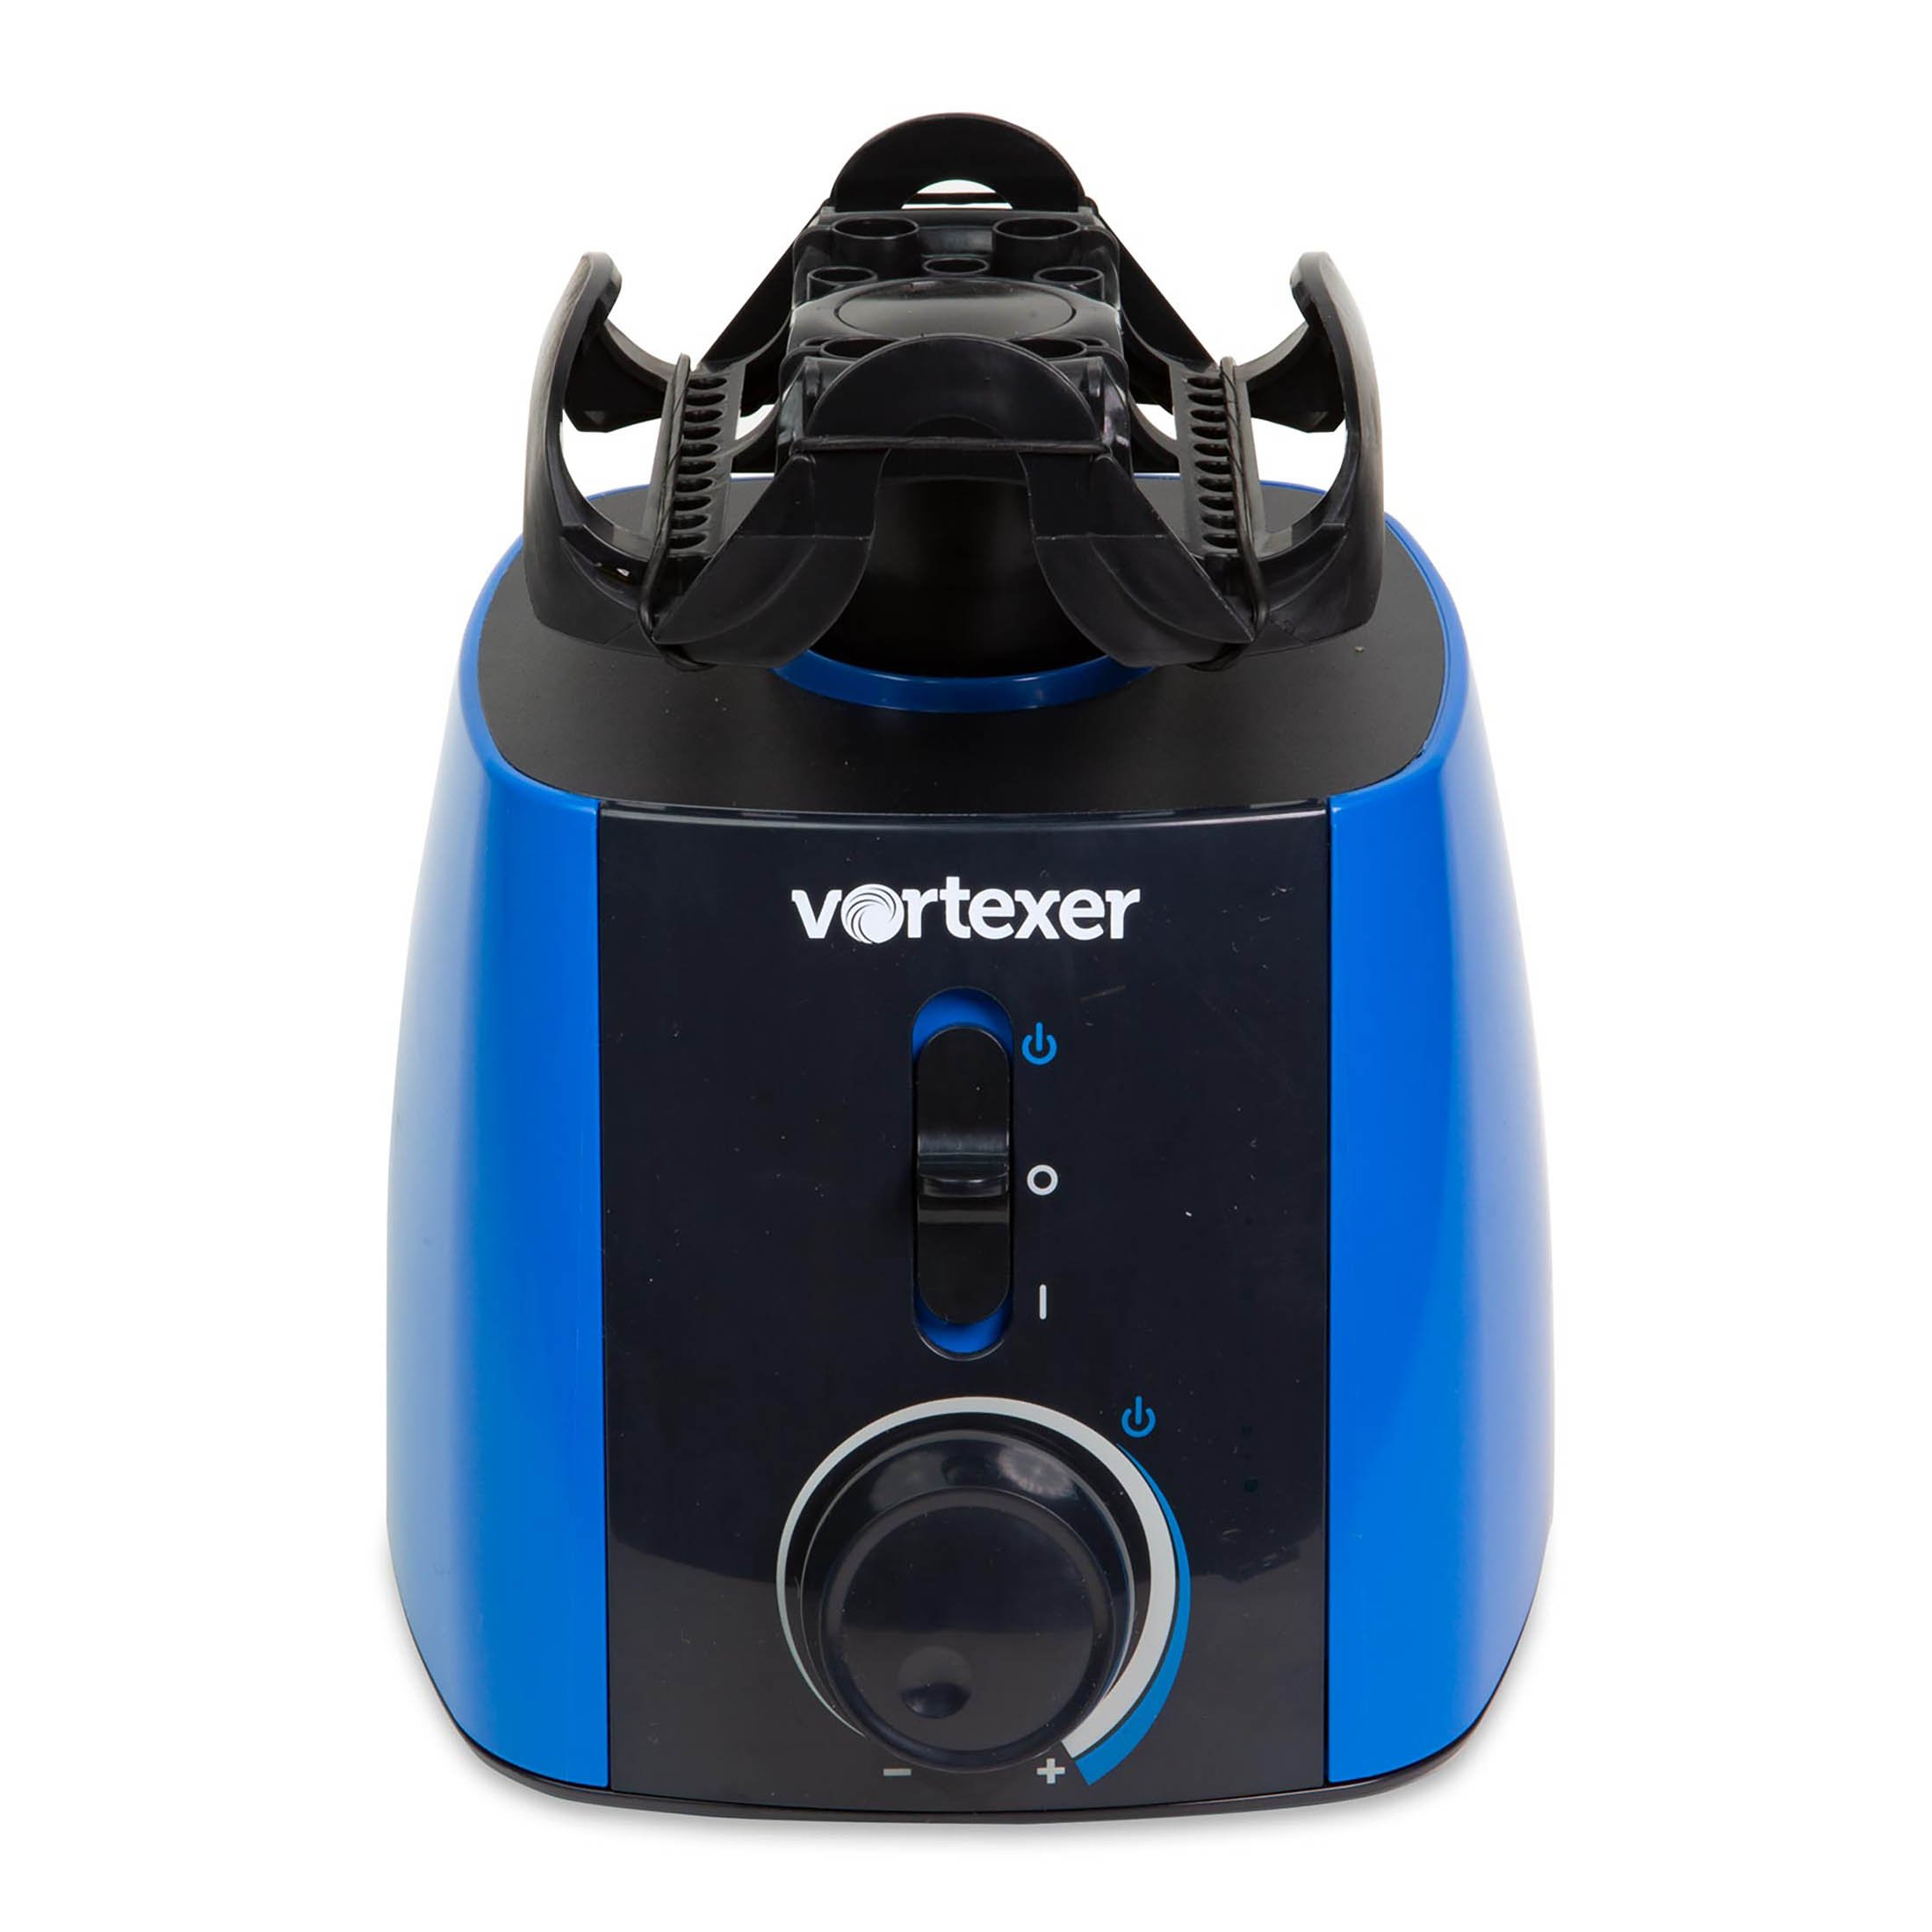 Mini Vortex Mixer - FOUR E'S SCIENTIFIC Lab Vortex Shaker, Speed